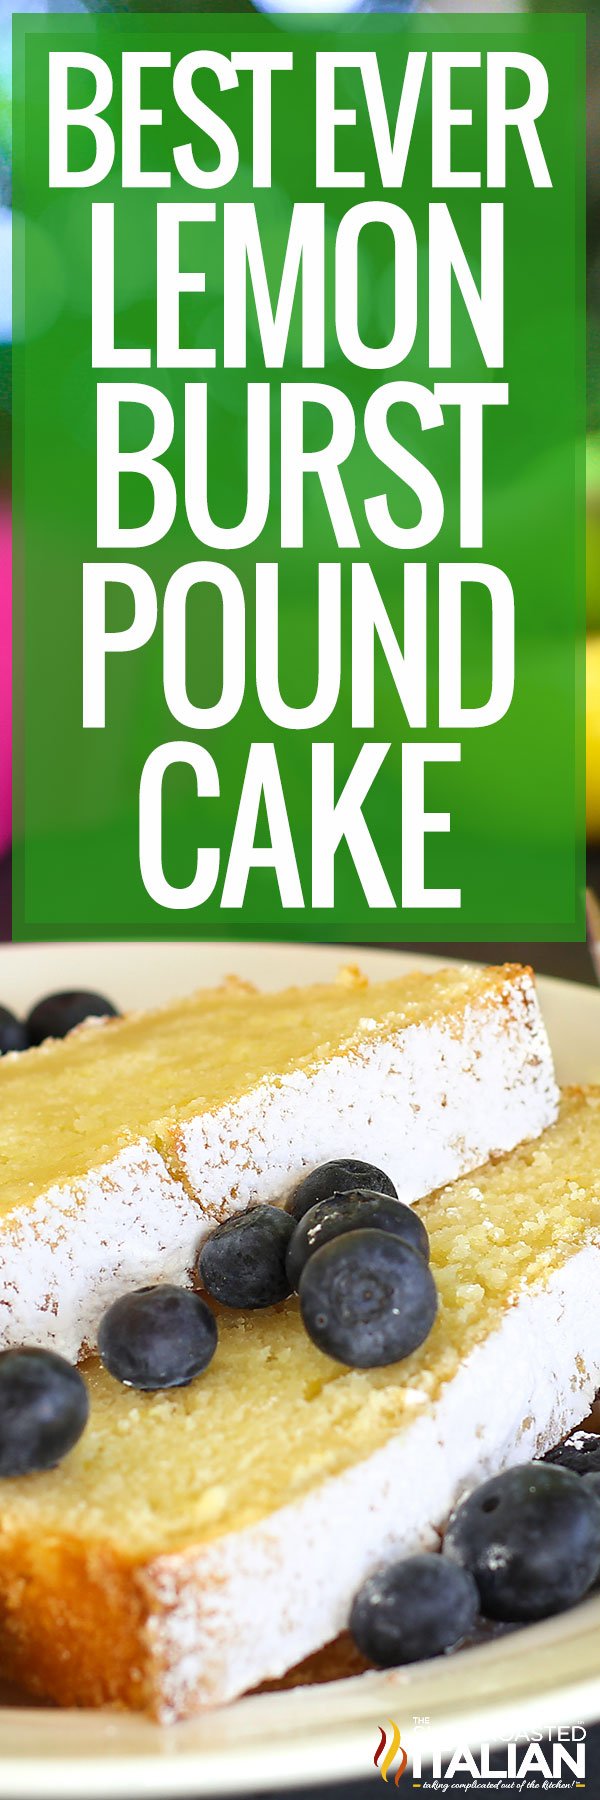 titled image (and shown): best ever lemon burst pound cake